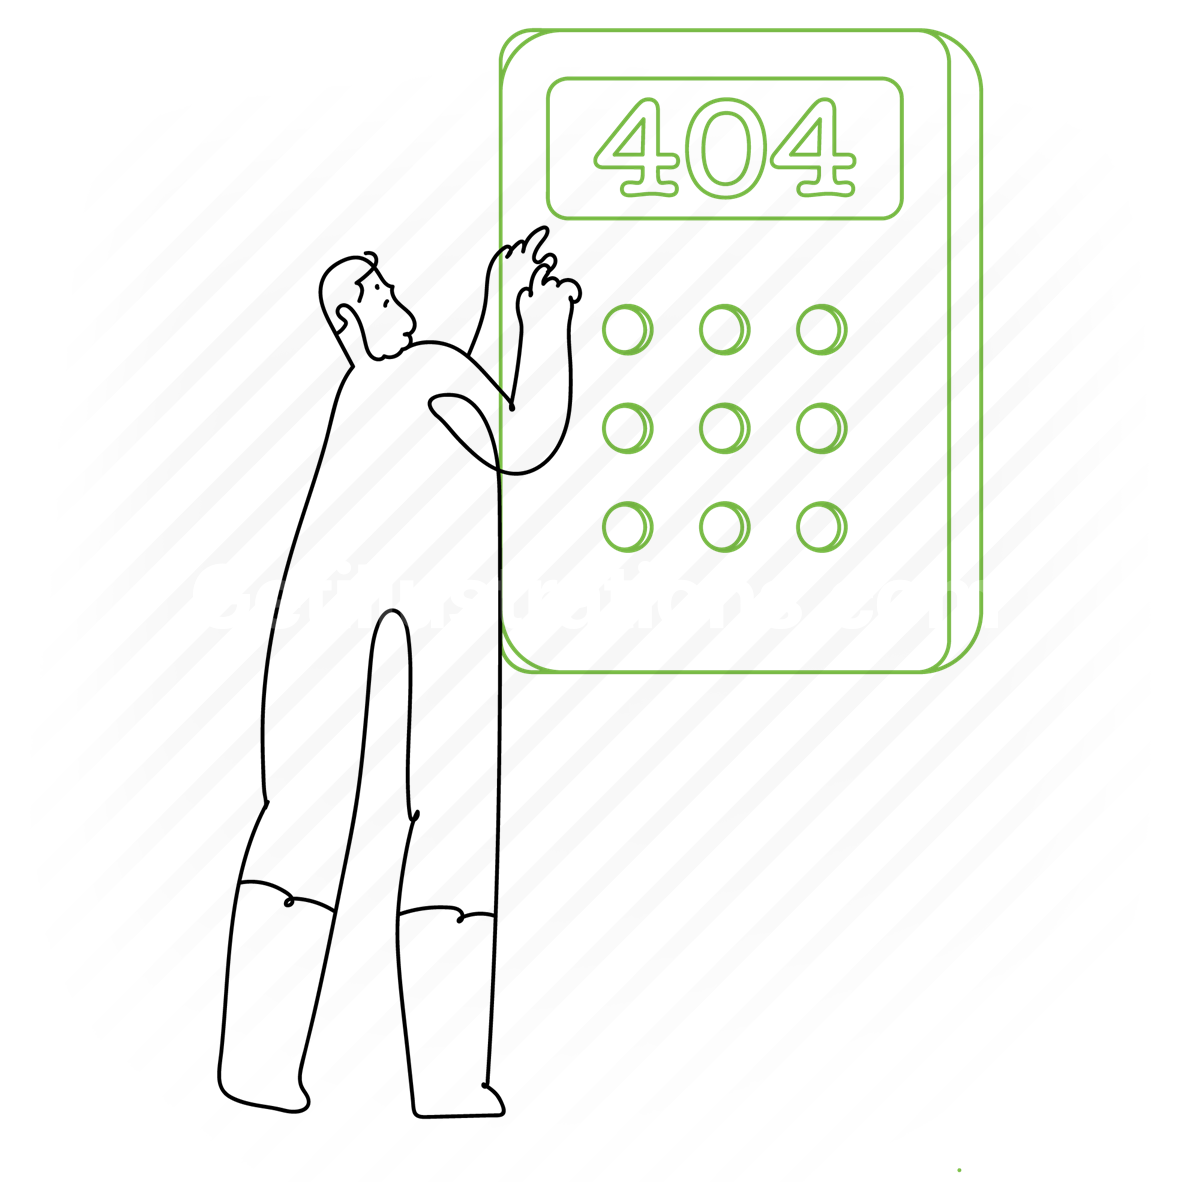 Error and 404 illustration